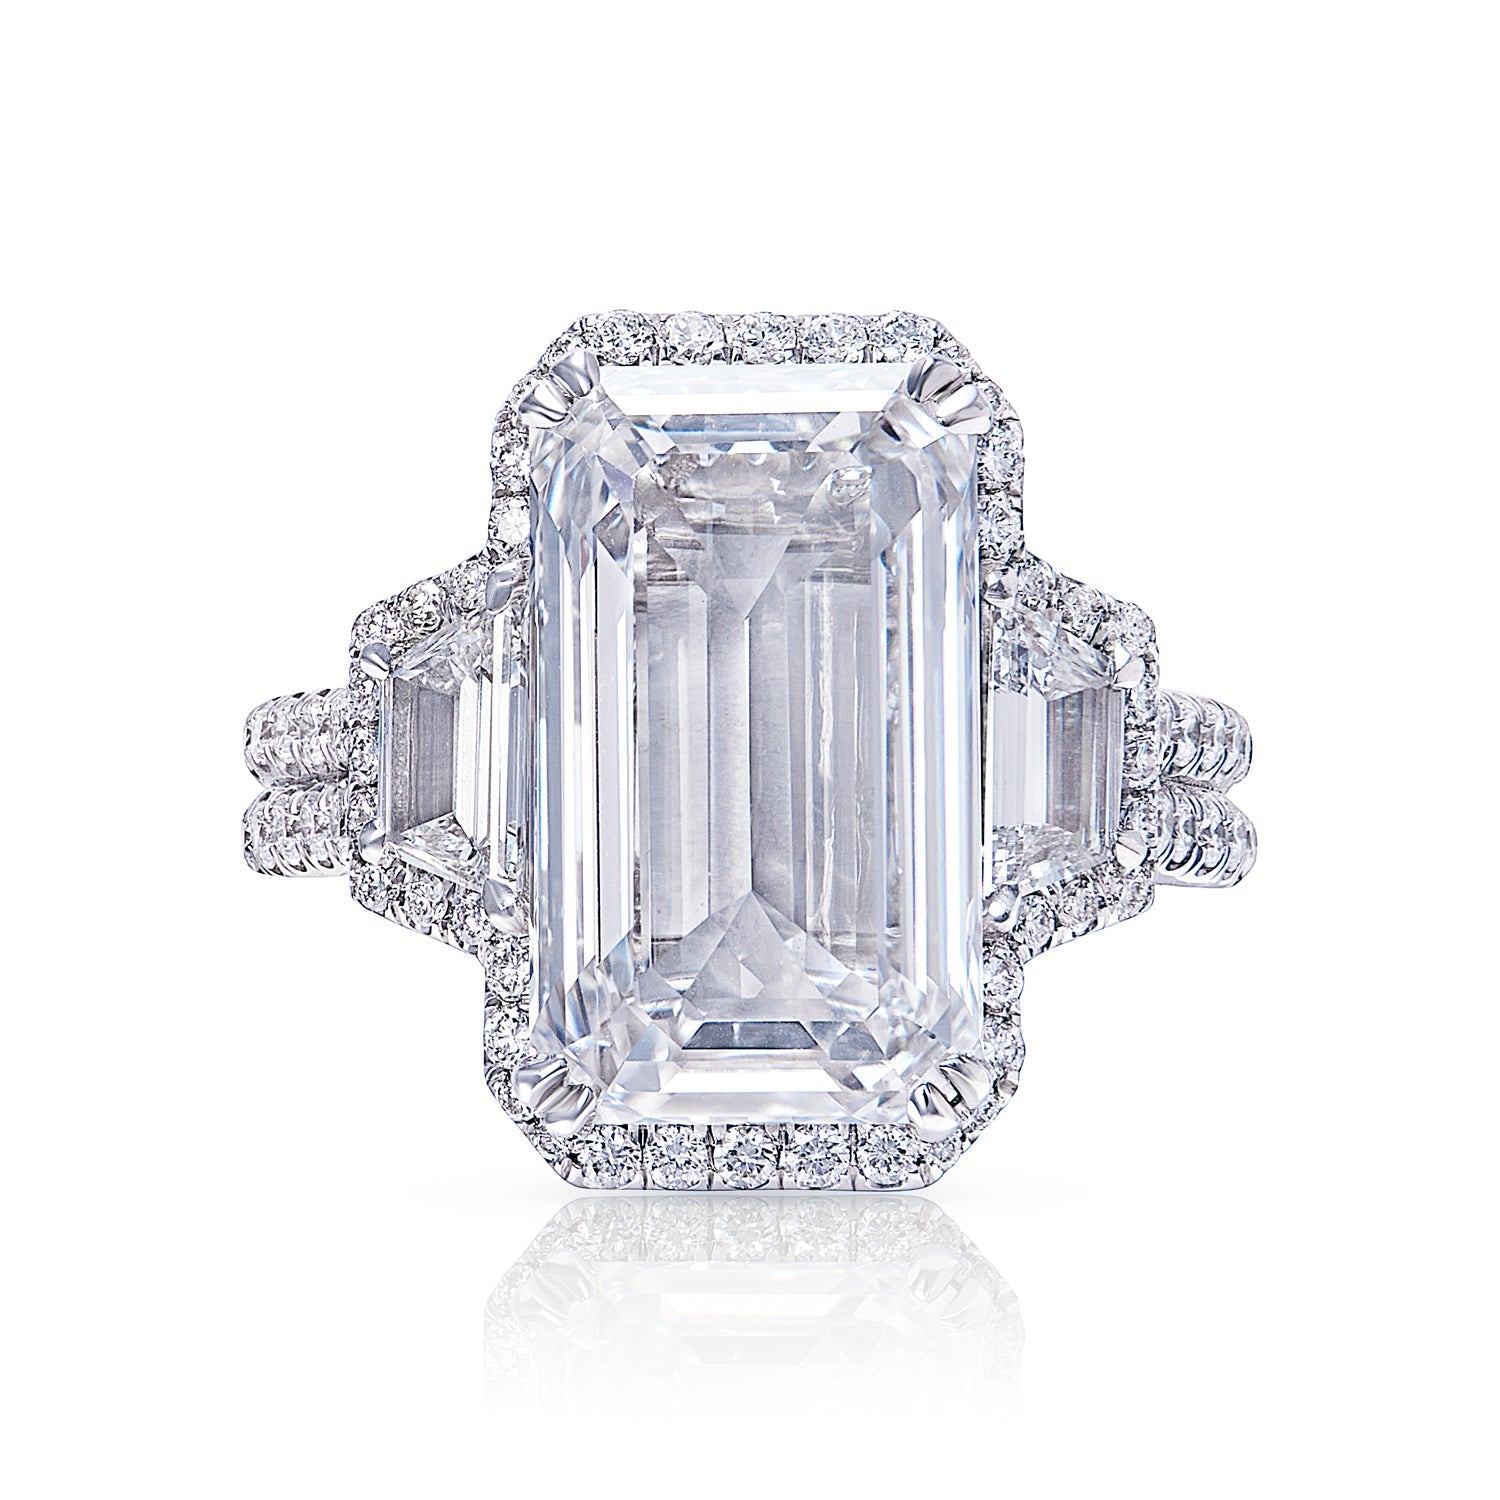 Norah 9 Carat Emerald Cut E VVS1 Diamond Engagement Ring in Platinum. GIA Front View